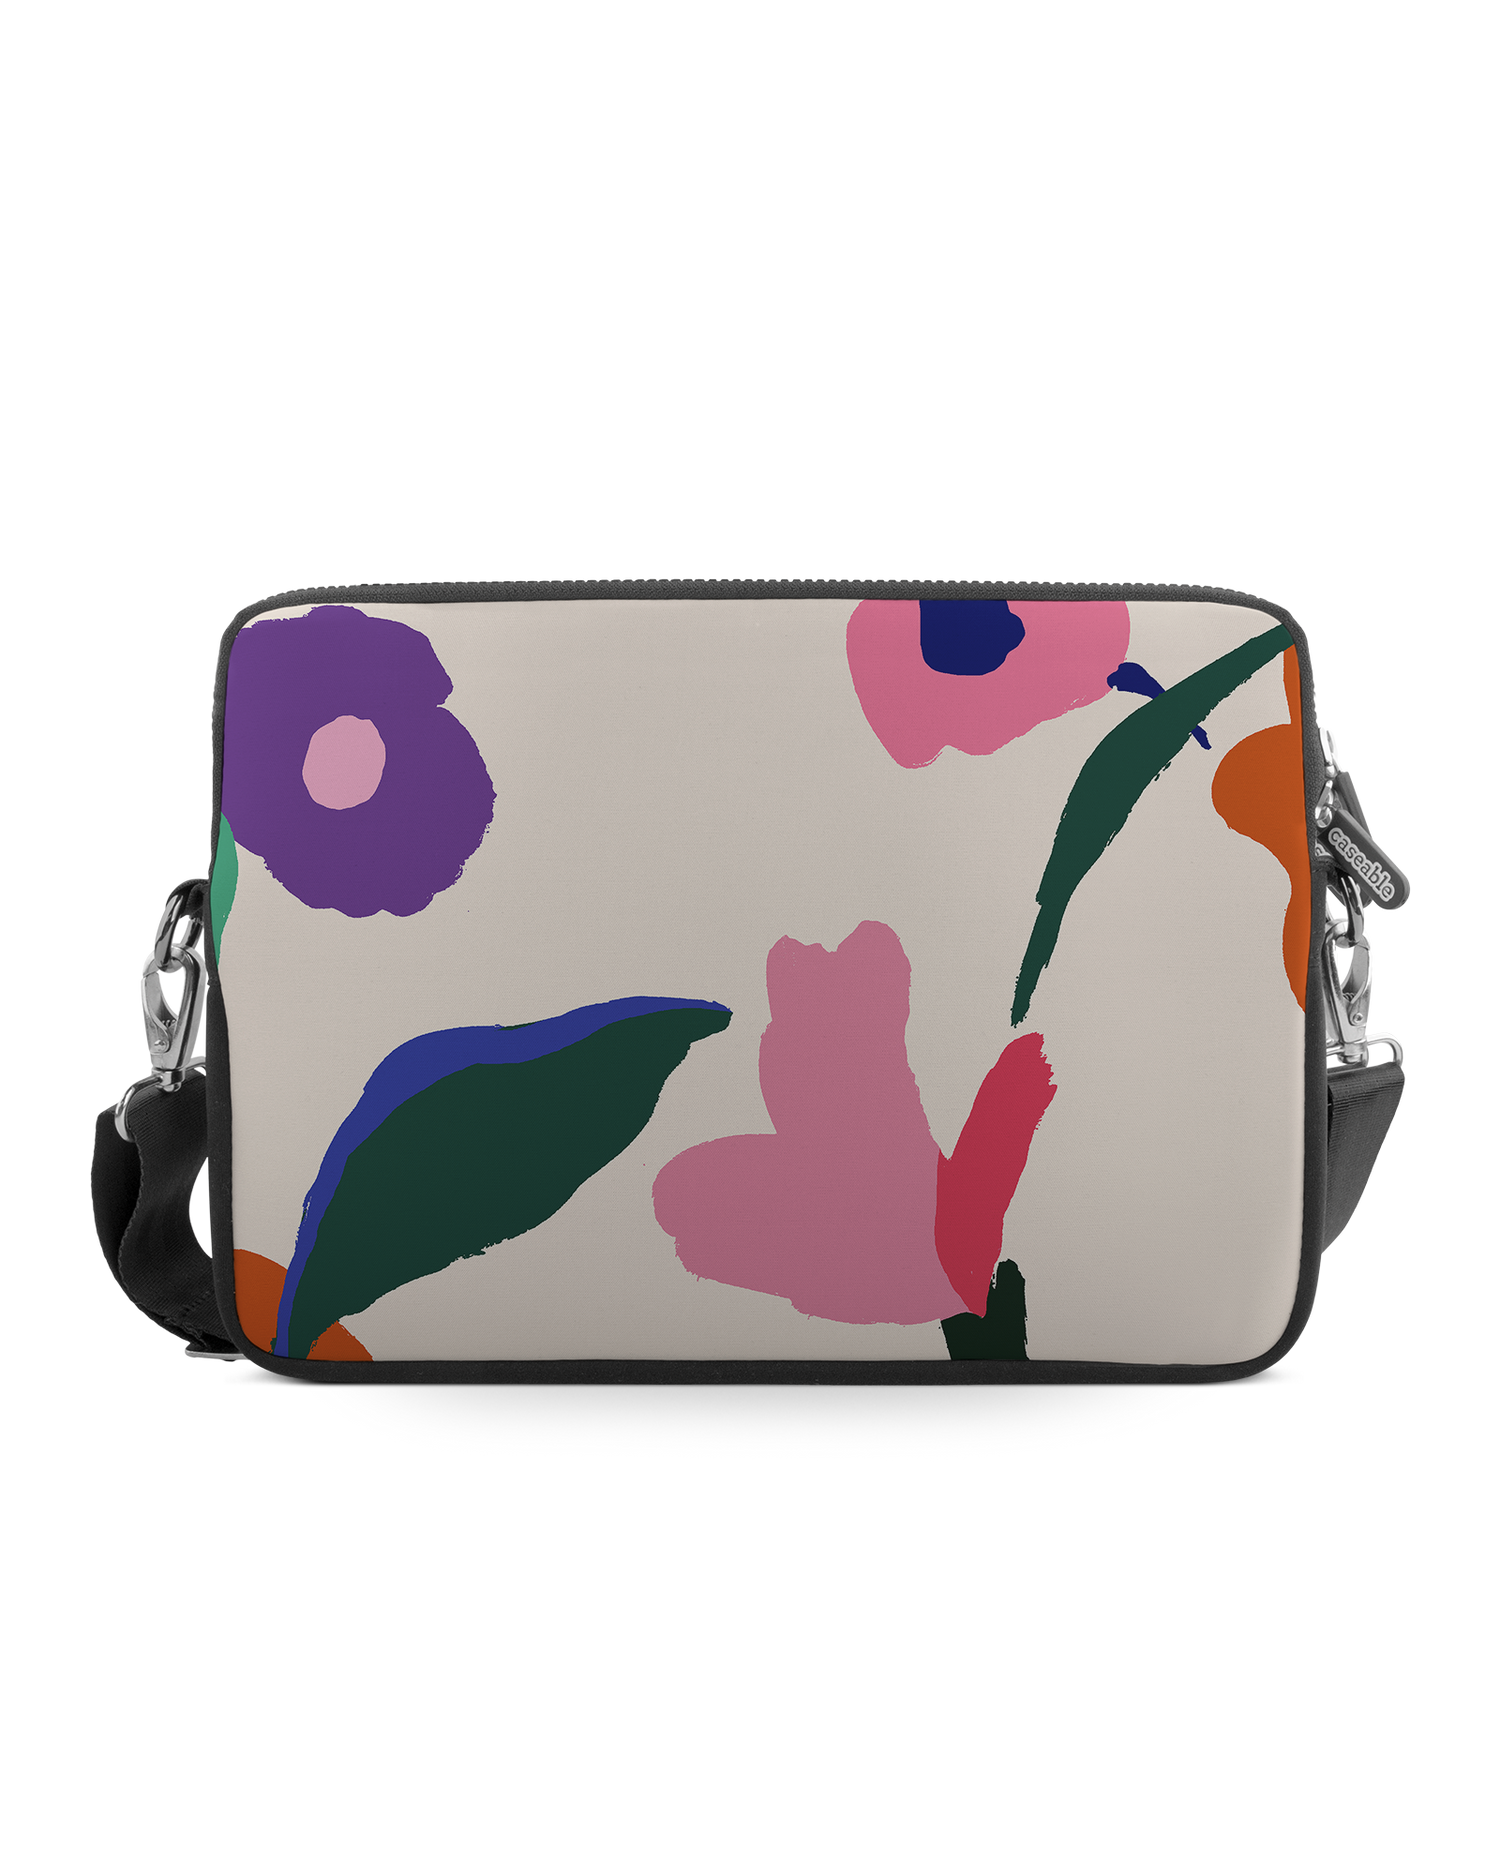 Handpainted Blooms Premium Laptop Bag 13-14 inch: Front View